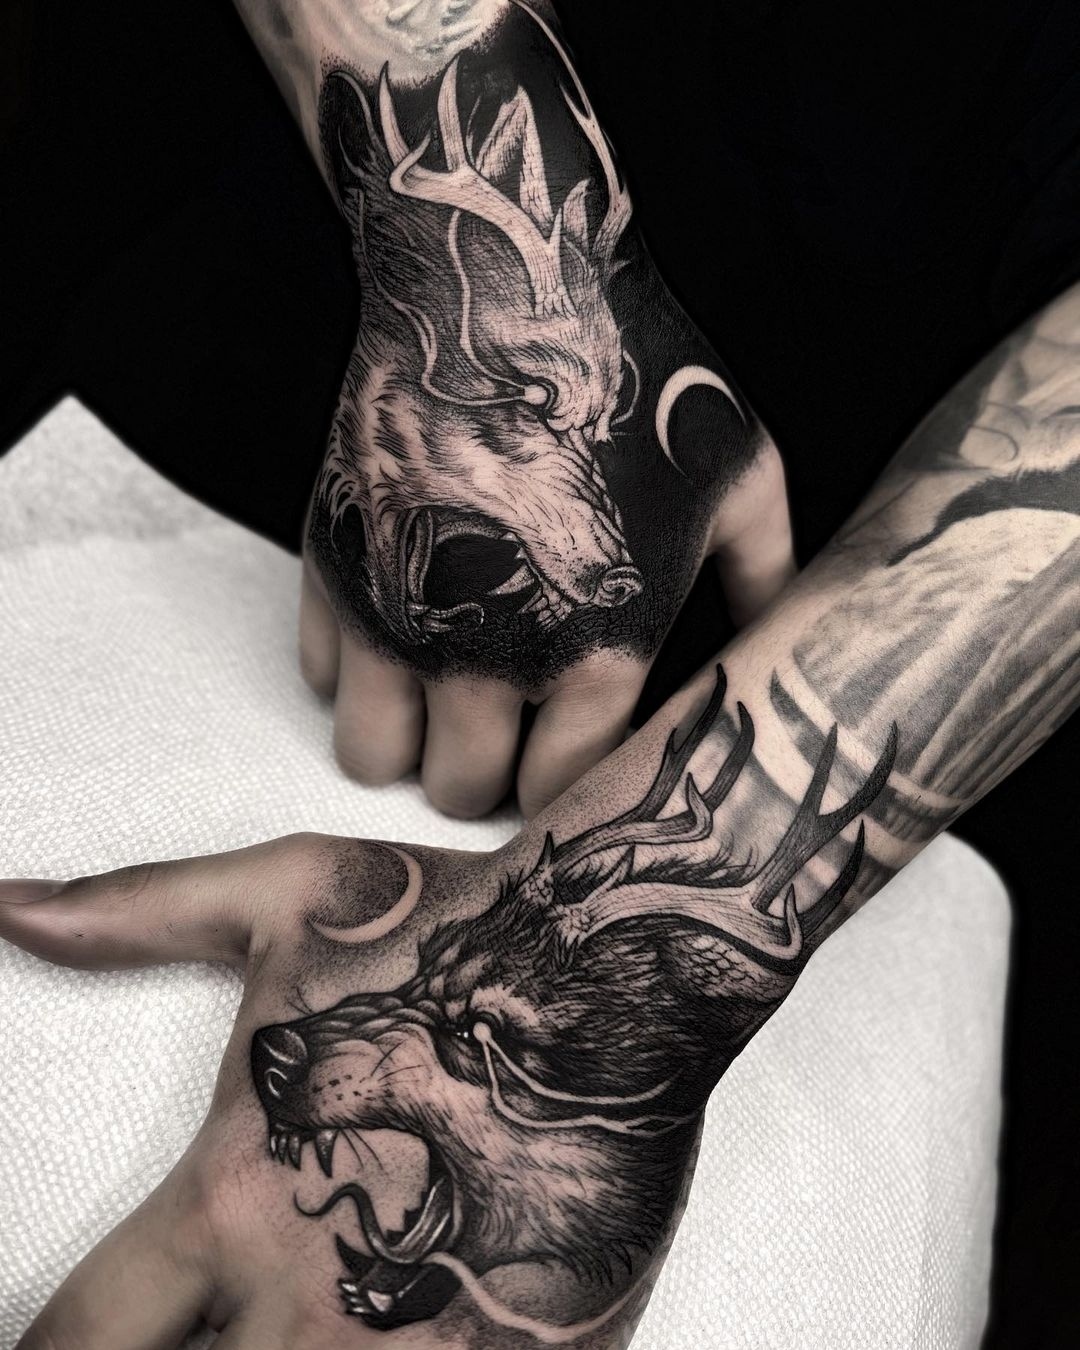 Wolf Tattoos on Hands - Best Tattoo Ideas Gallery